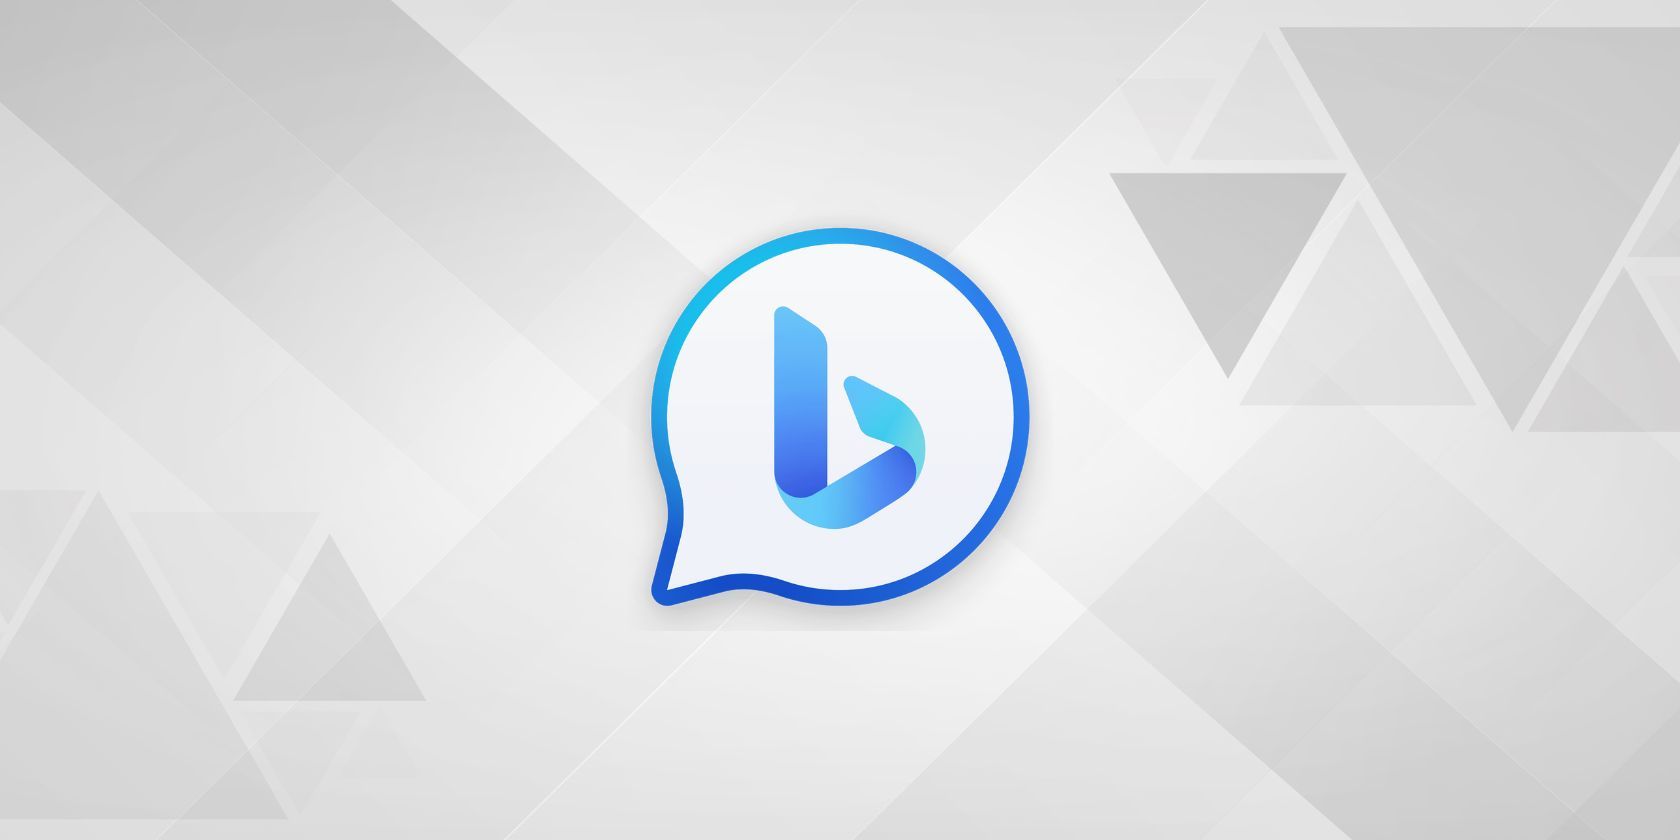 Logotipo do Bing Chat com fundo abstrato branco